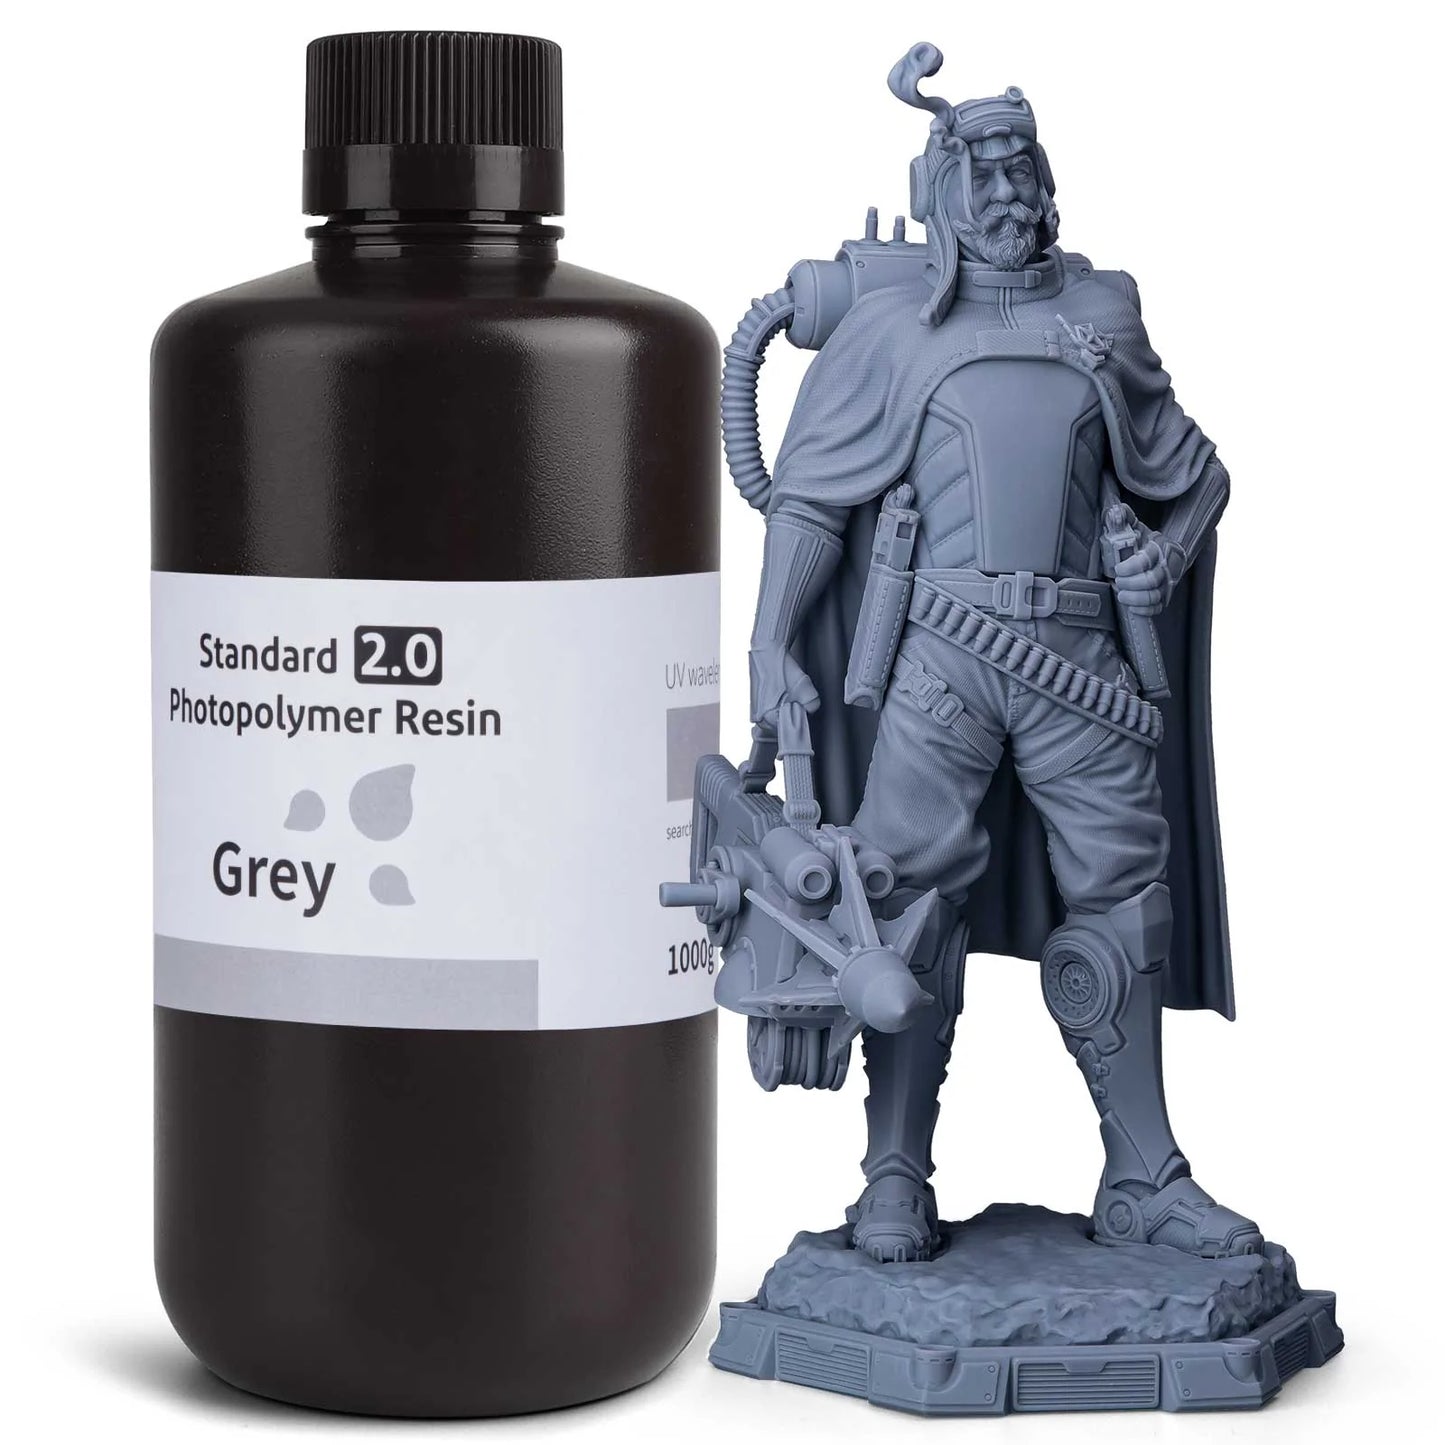 ELEGOO Standard Resin V2.0 Gray 1kg